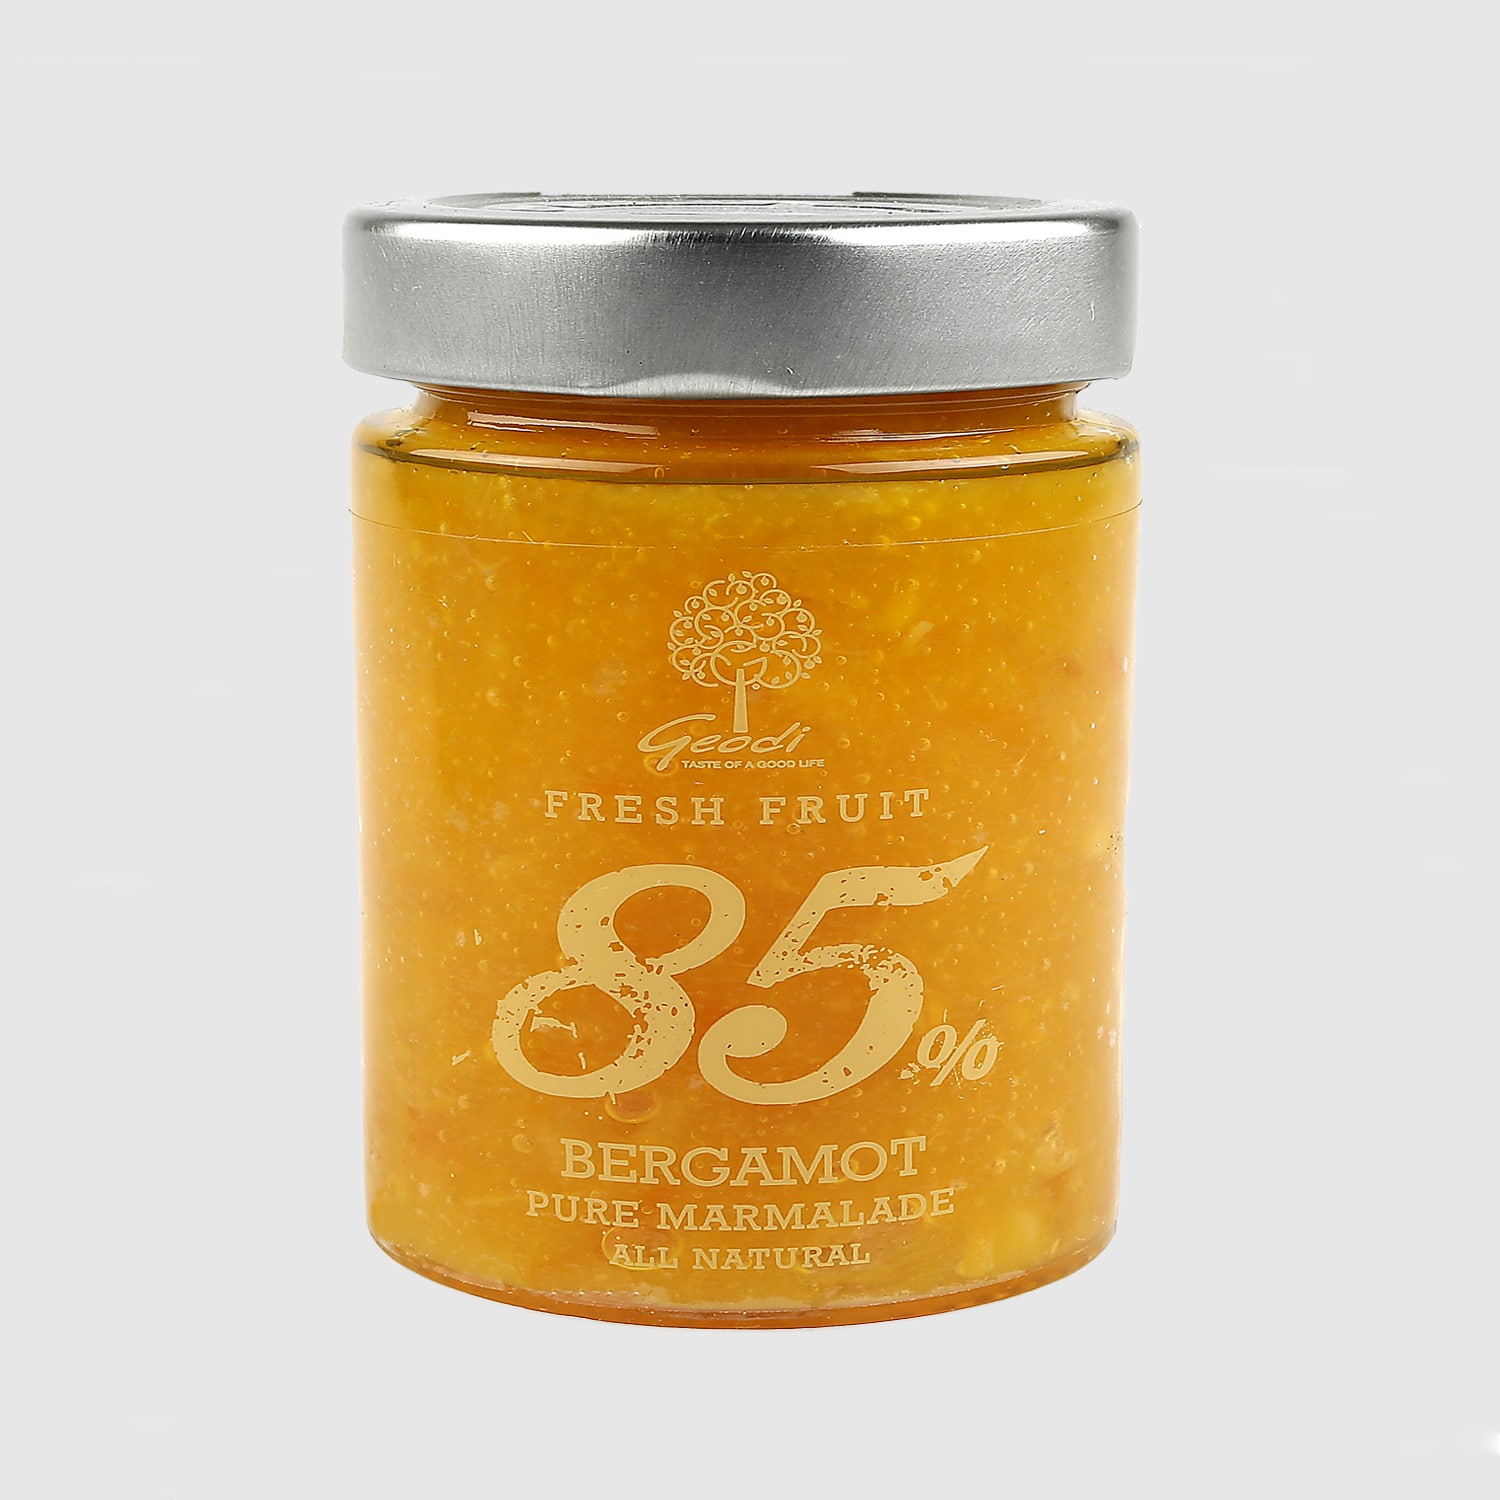 Bergamot Pure Marmalade by Geodi